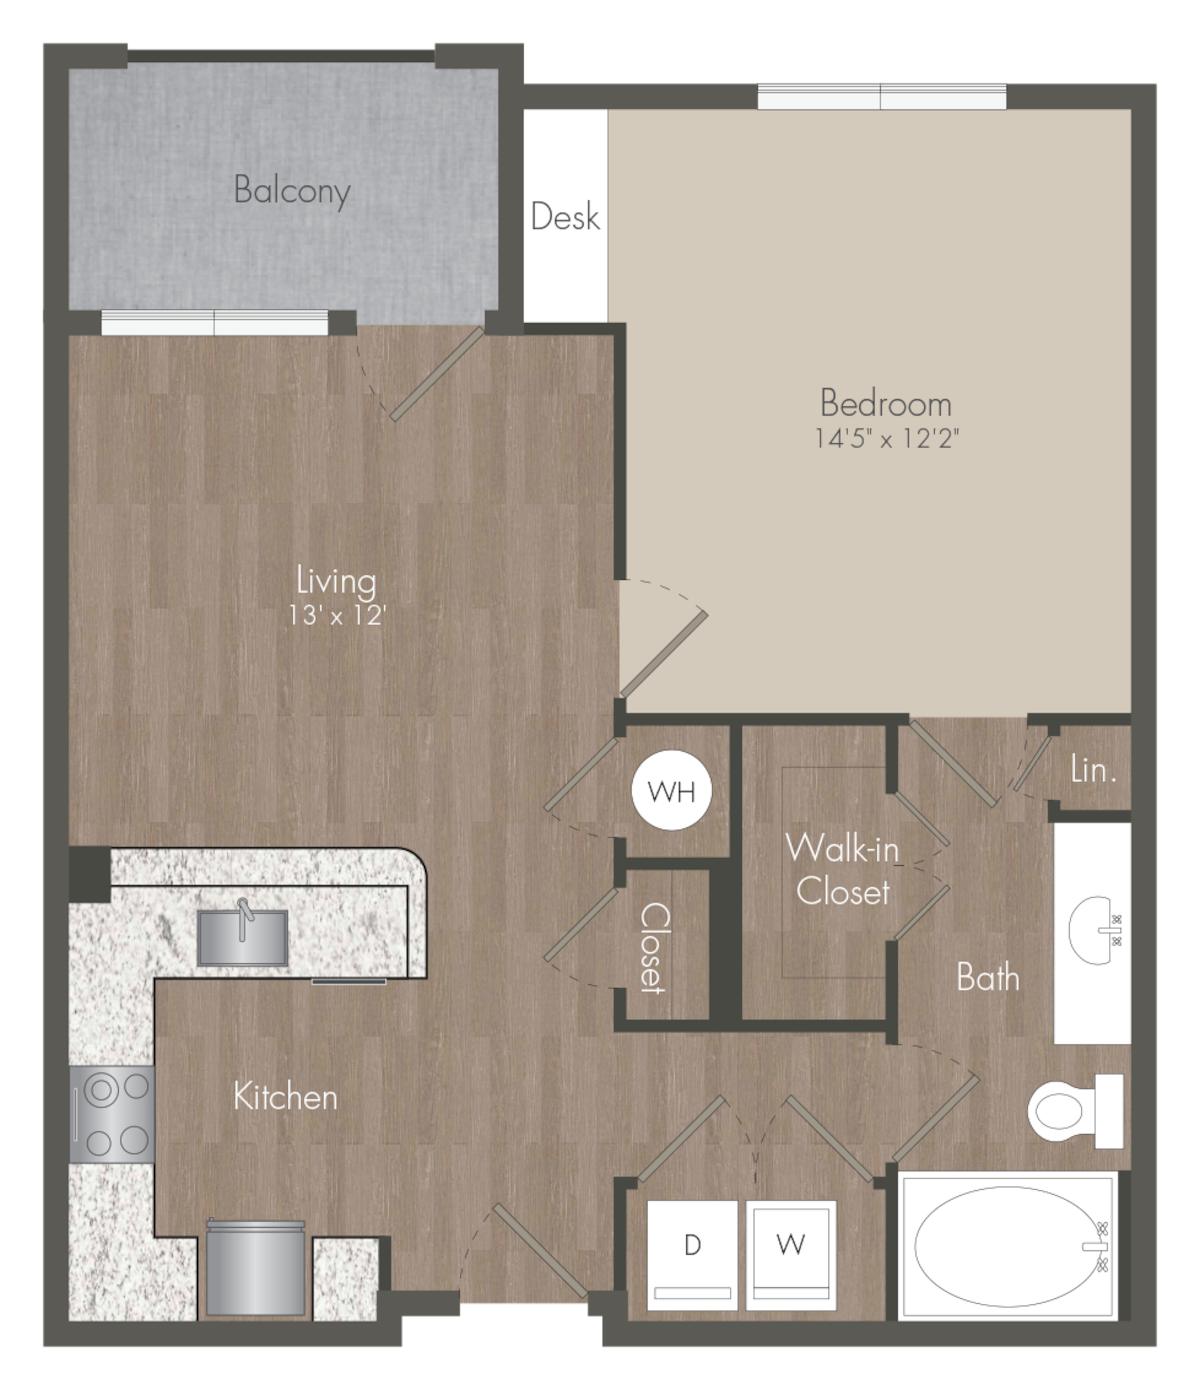 Floorplan diagram for A2 - 1x1, showing 1 bedroom